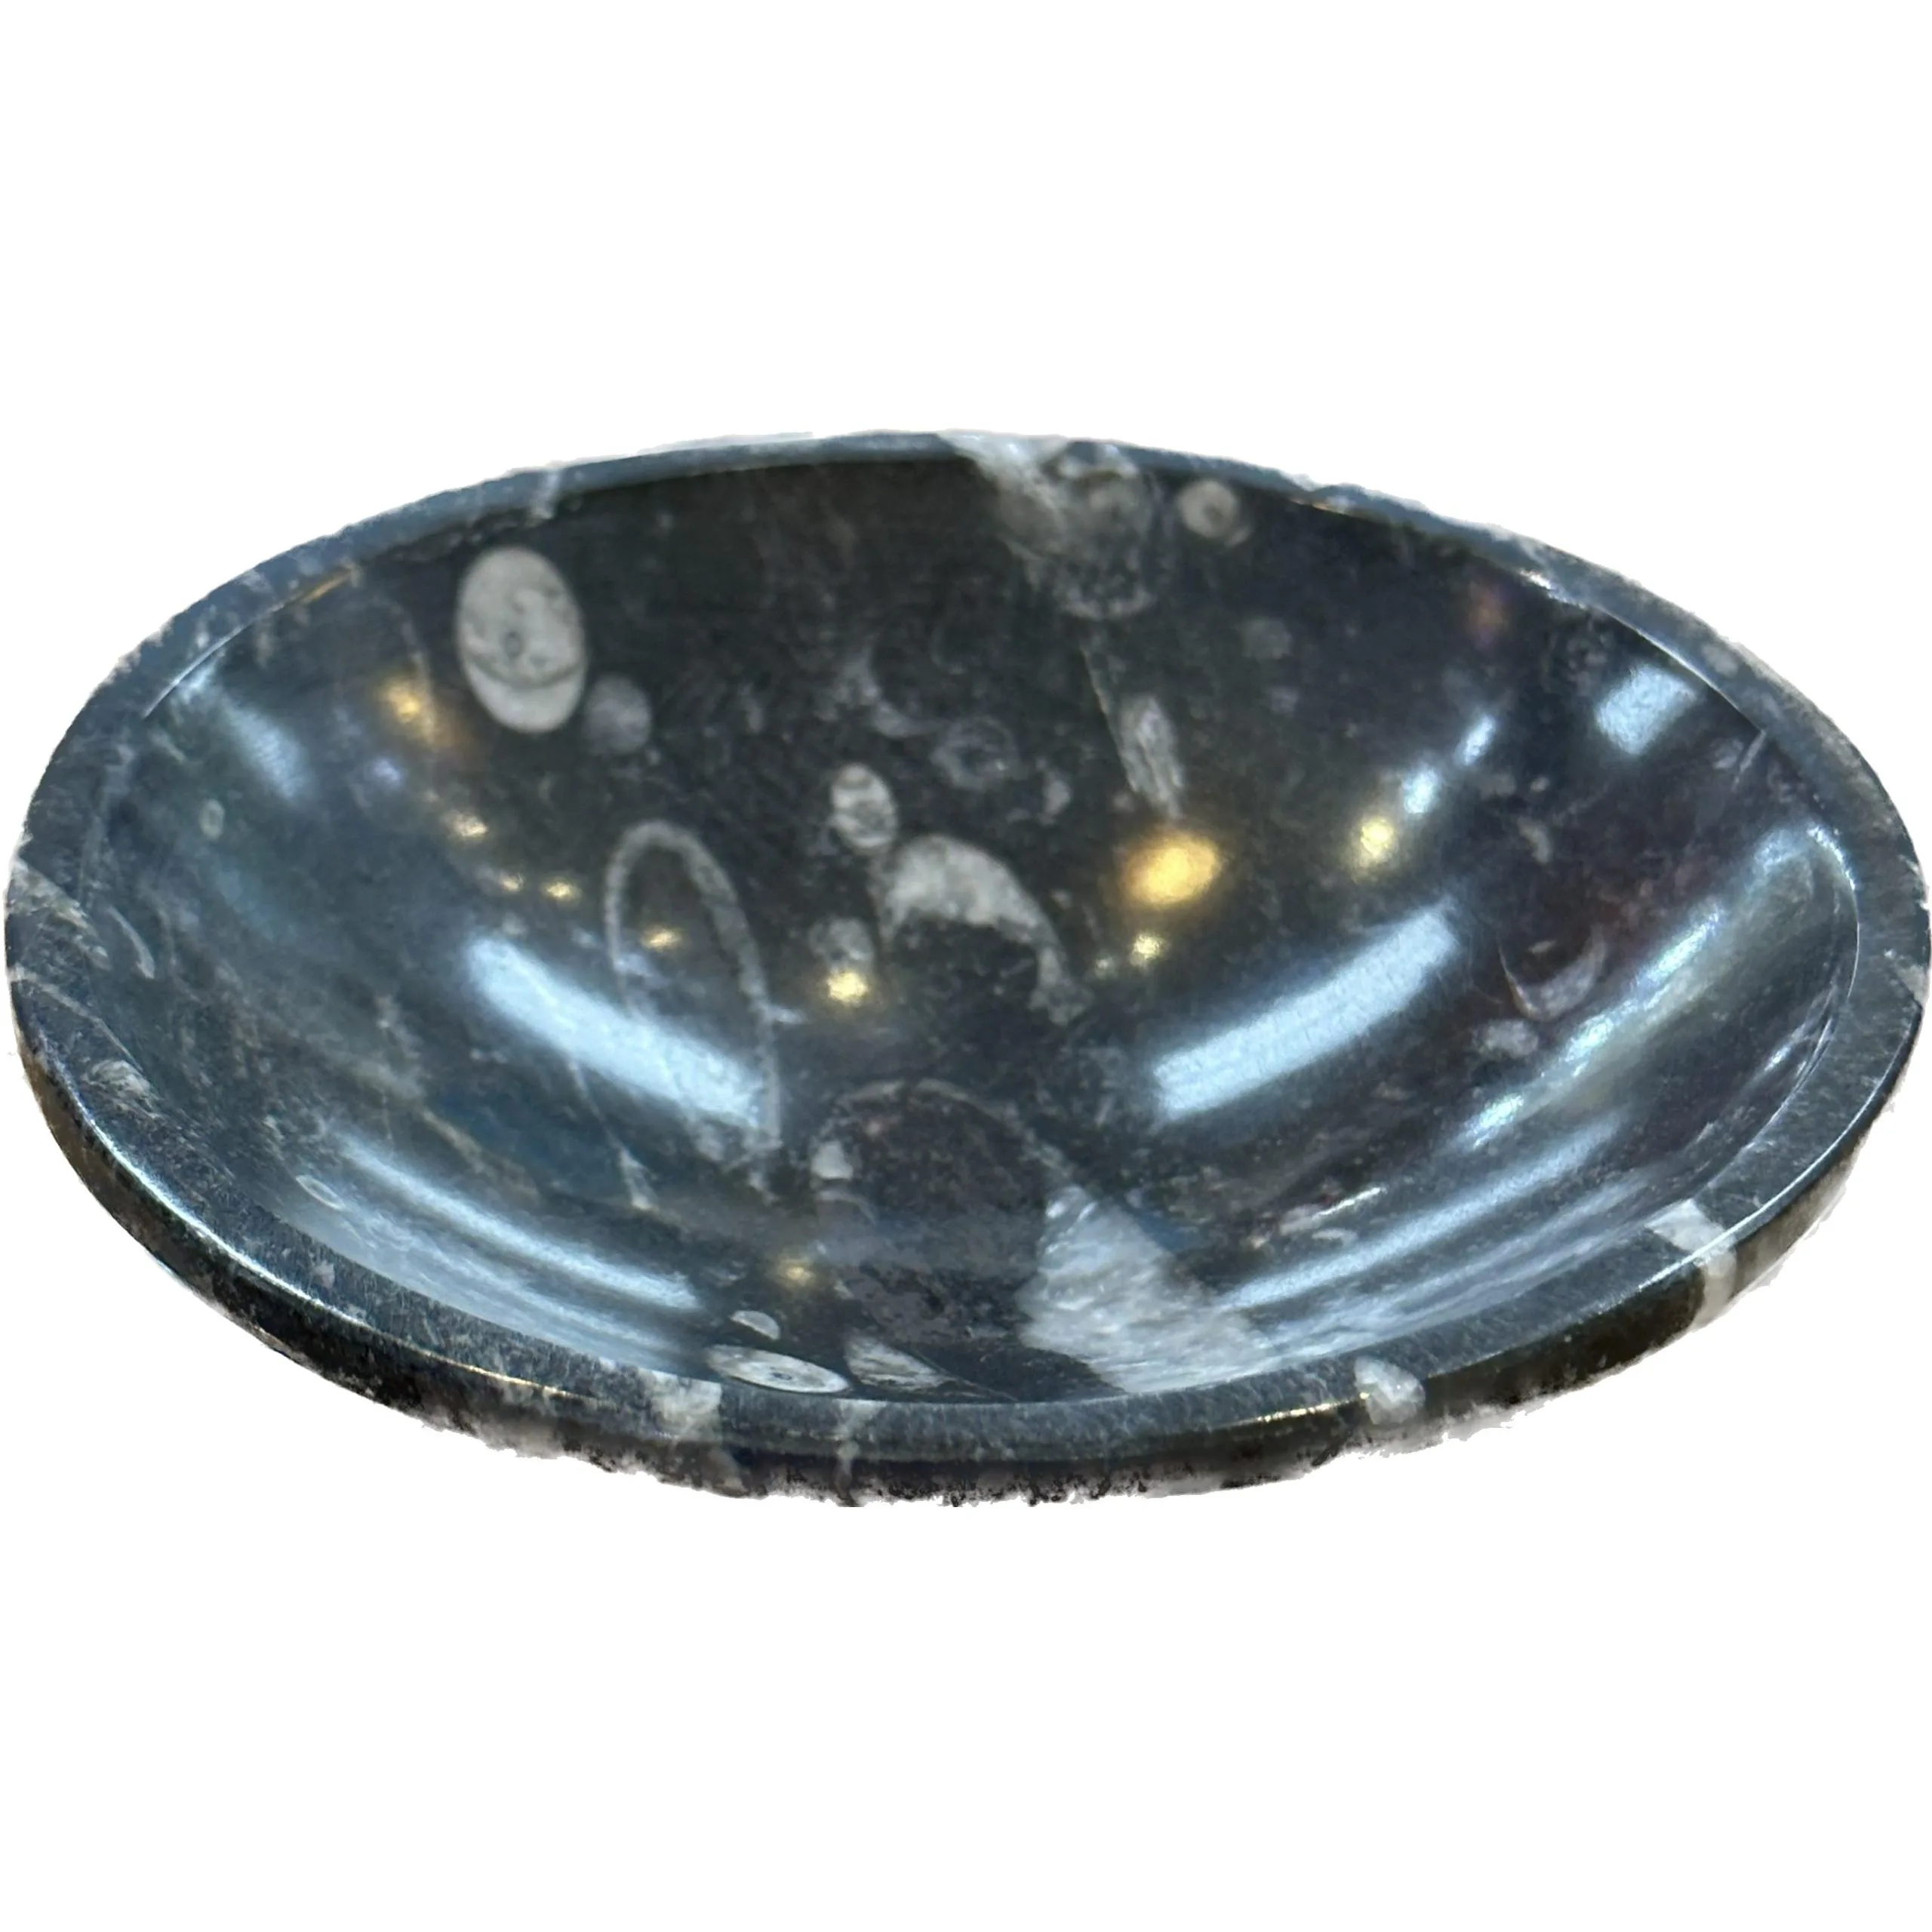 Fossil Bowl – 4 1/2 inch diameter Prehistoric Online